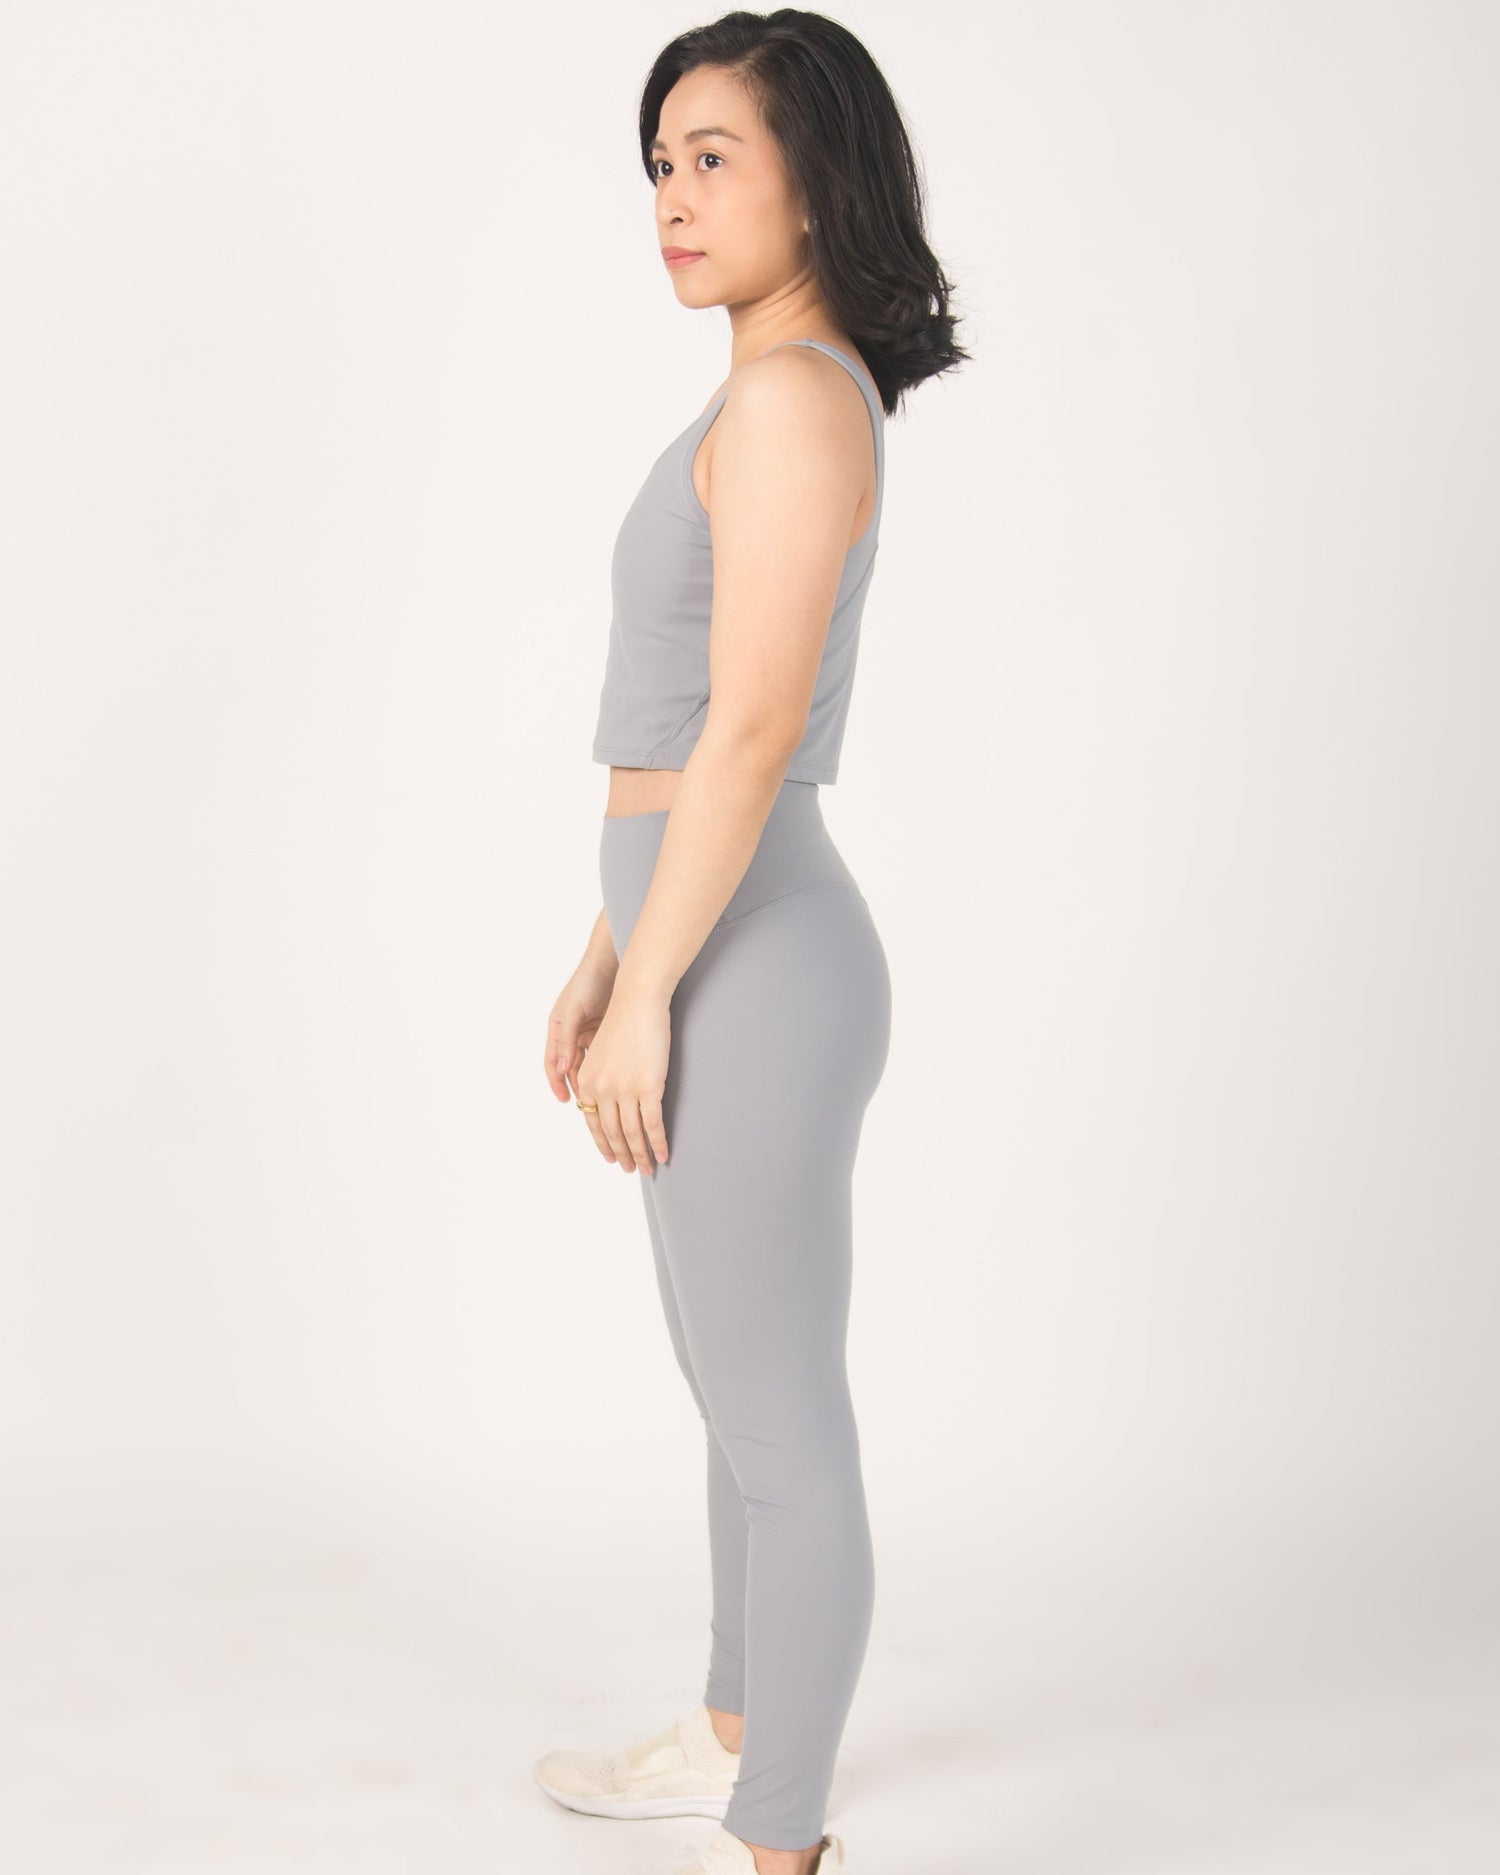 Feel good leggings in Slate - New Day Activewear